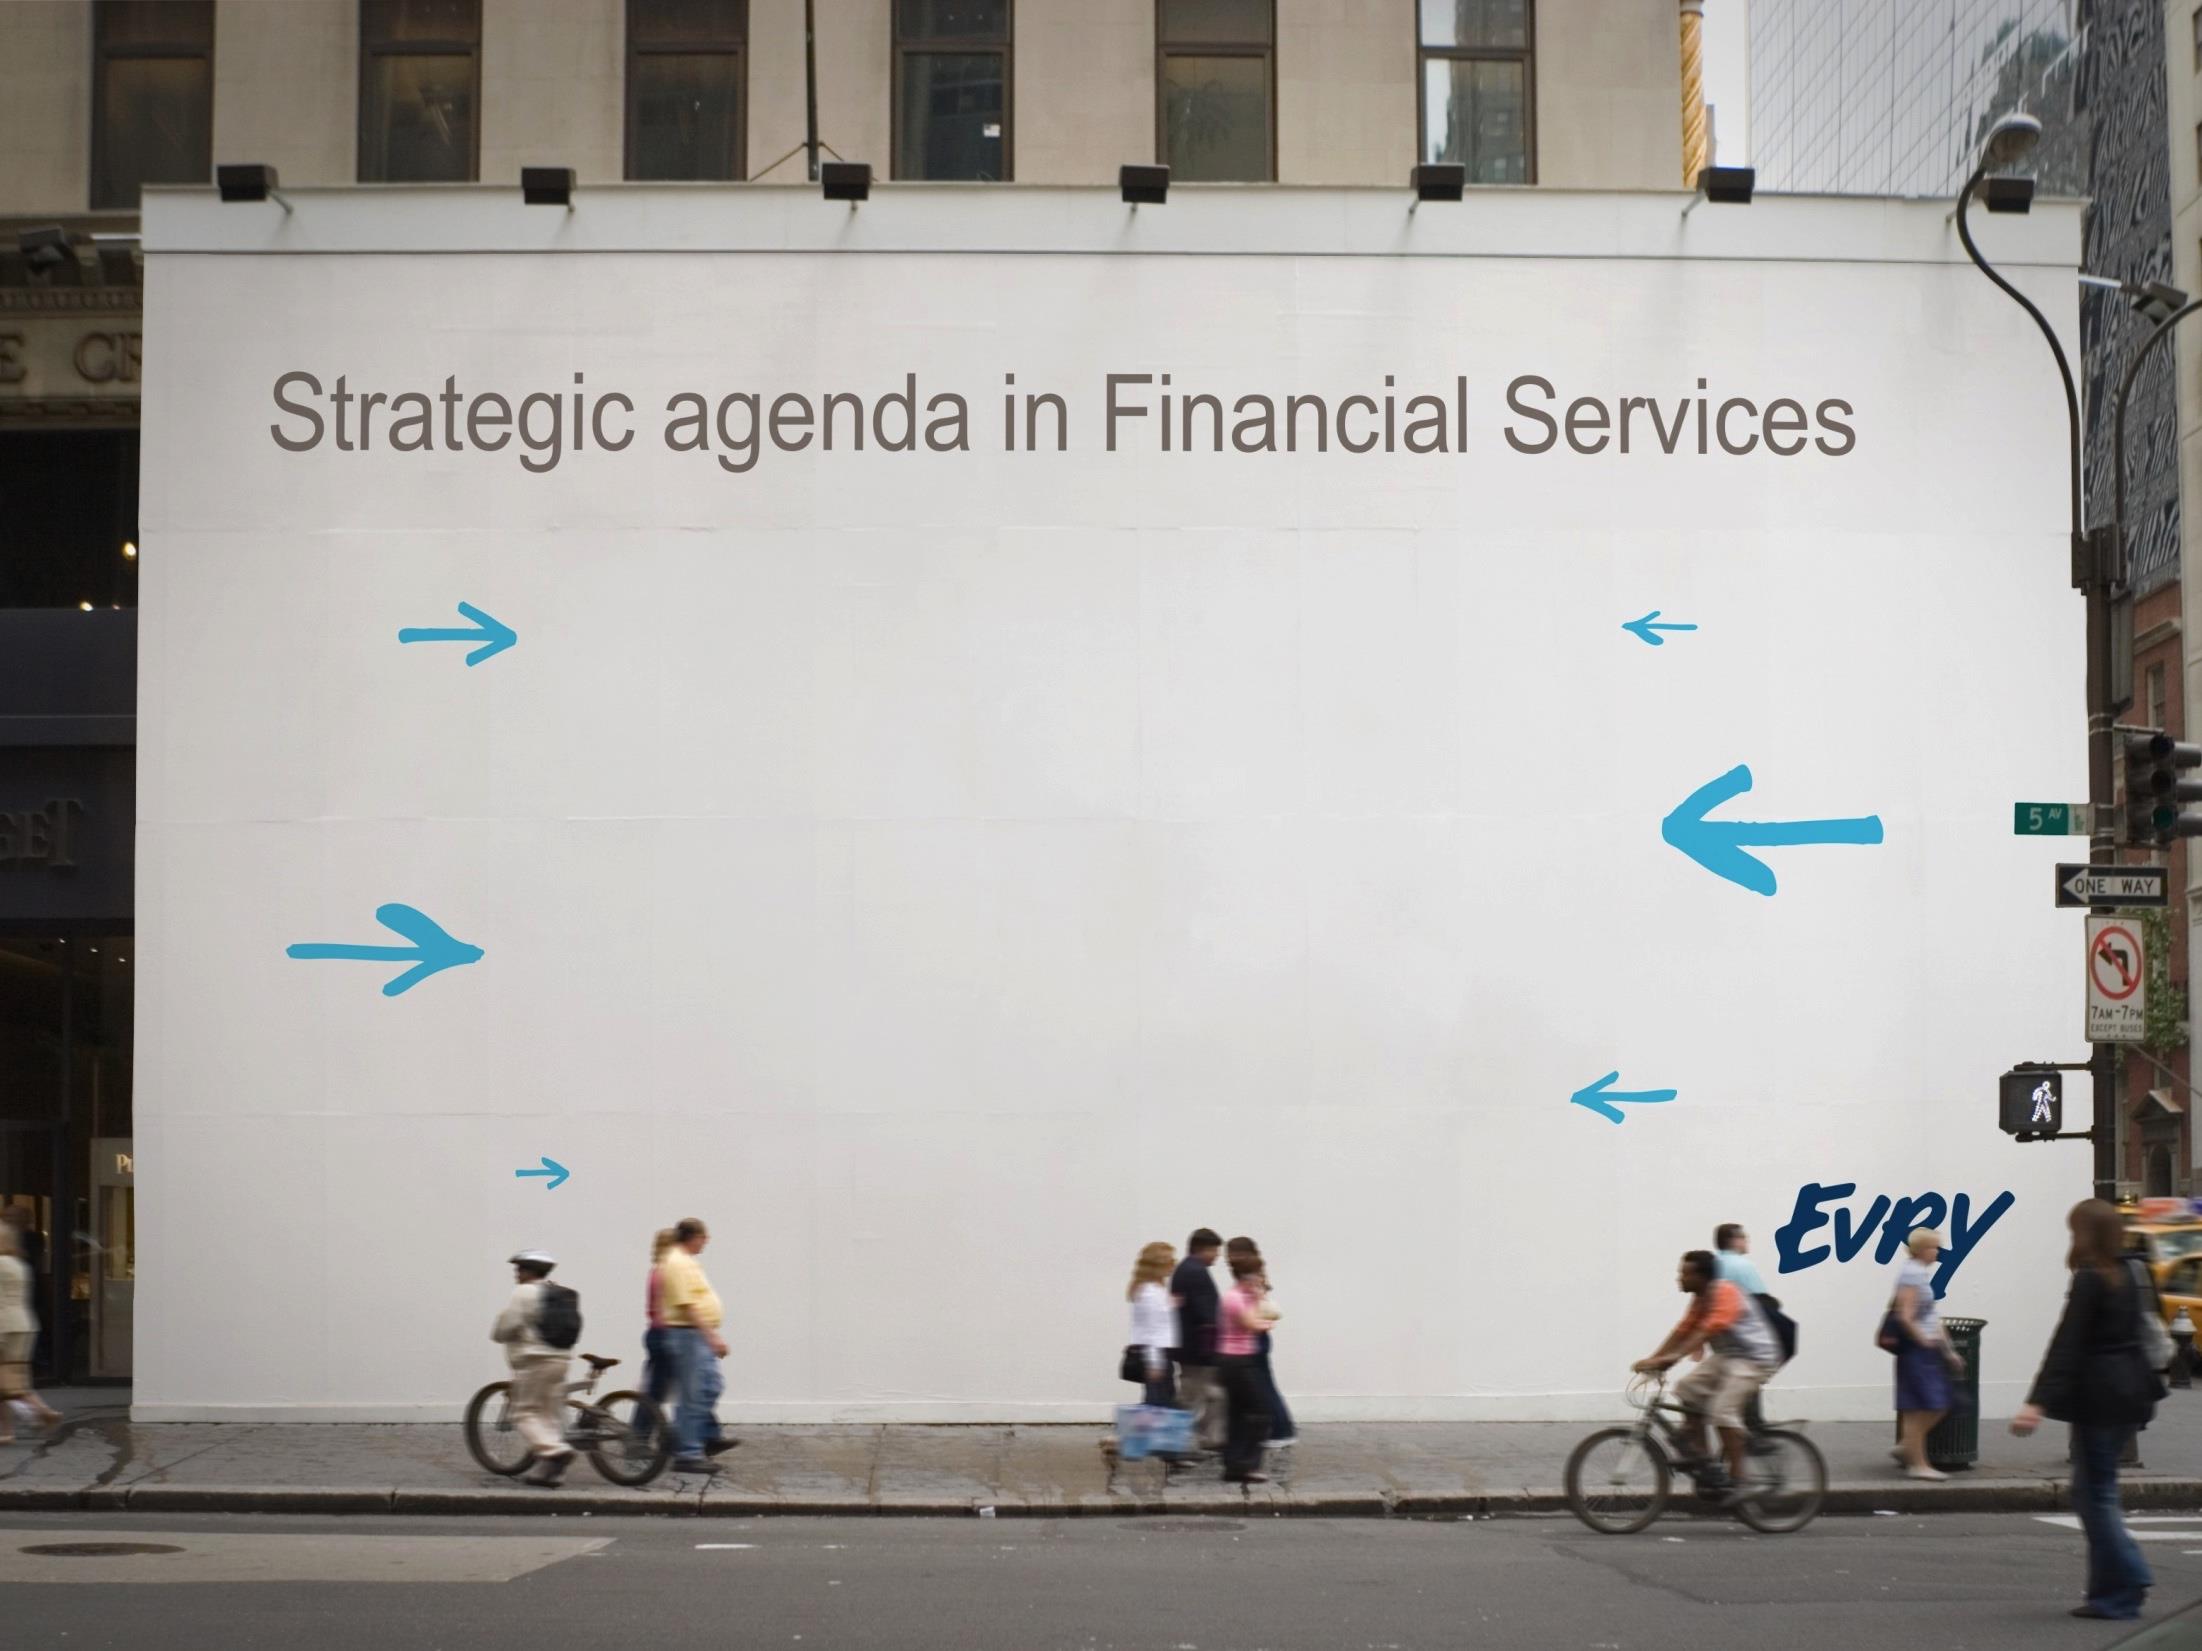 Strategic agenda in Financial Services